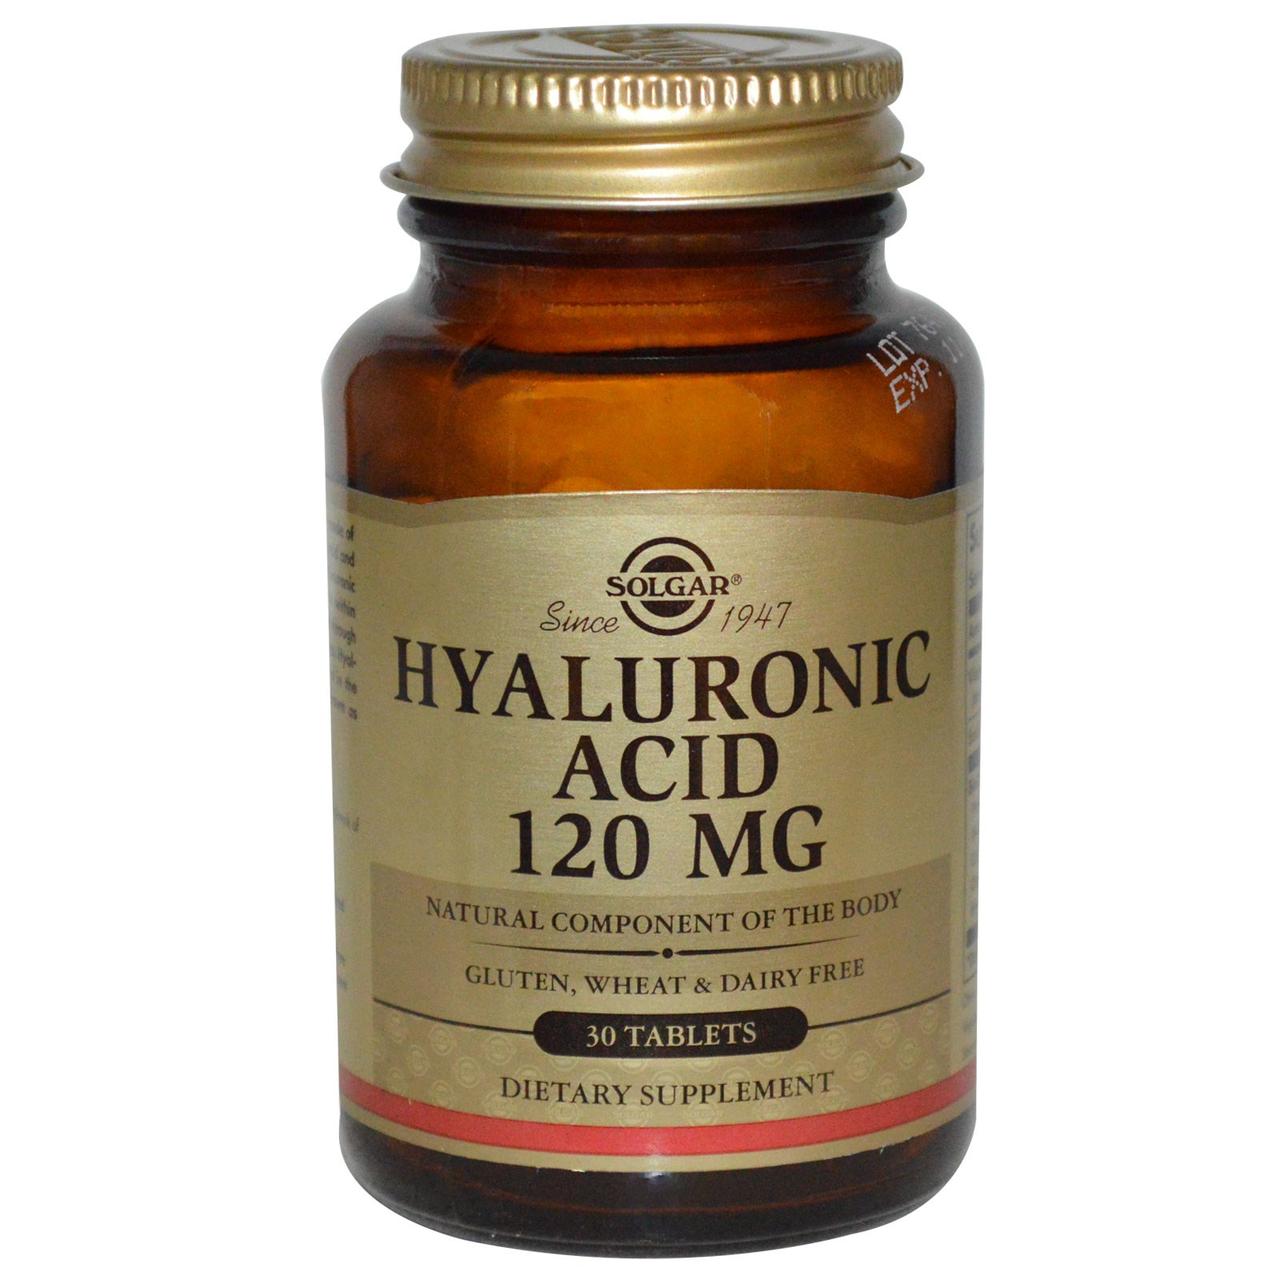 Hyaluronic Acid 120 mg Solgar 30 Tabs,  мл, Solgar. Спец препараты. 